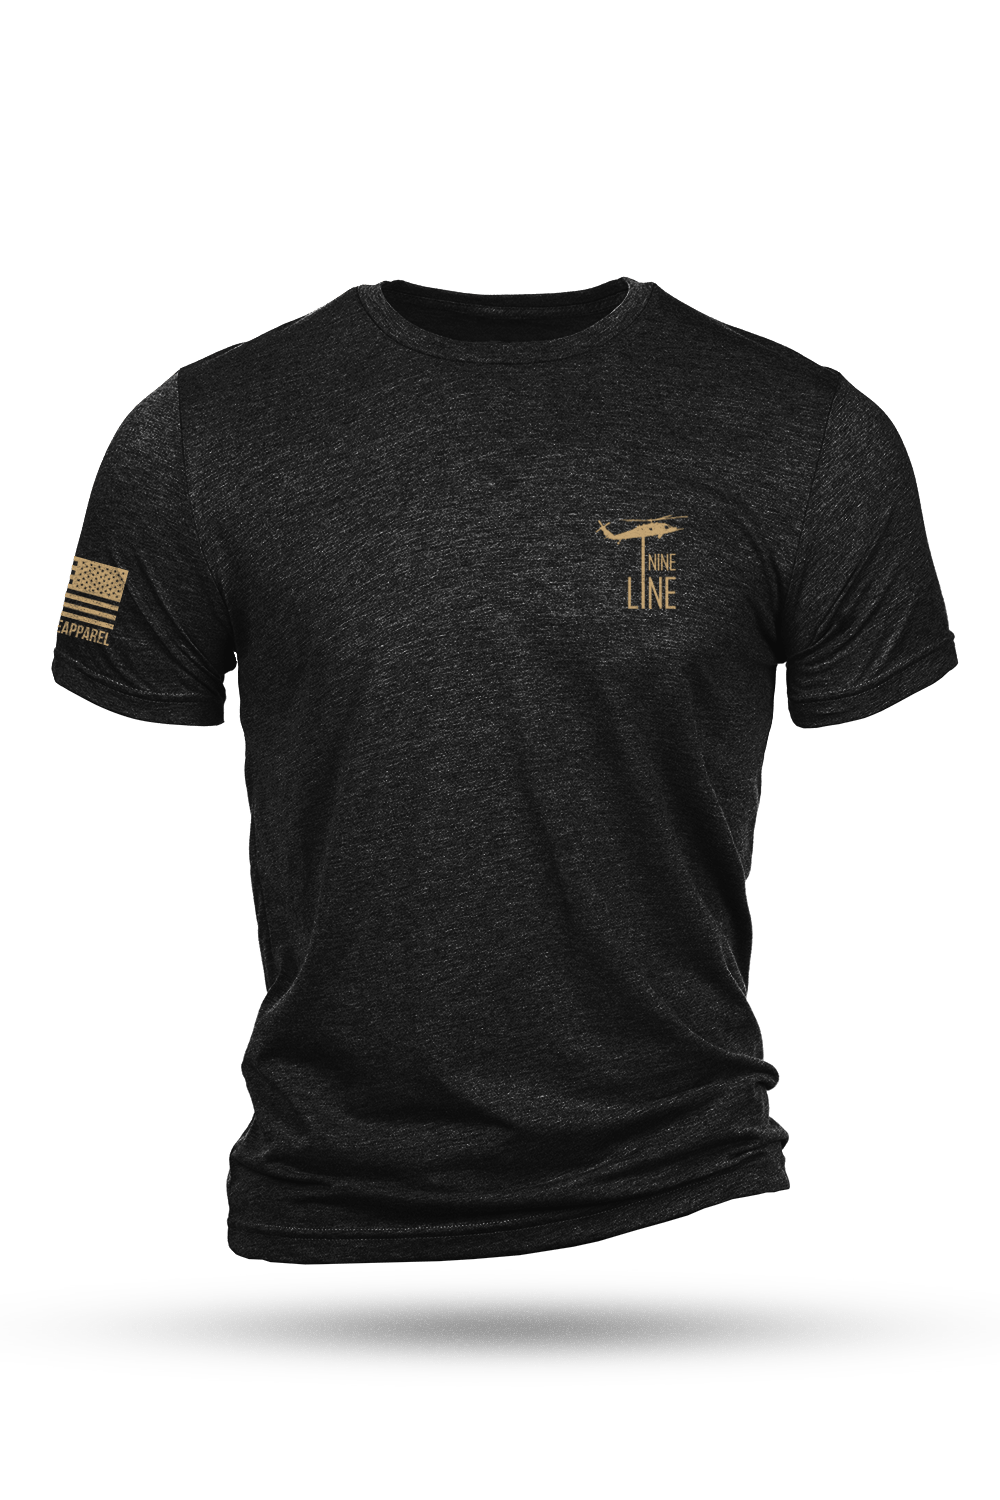 Tri-Blend T-Shirt - BASICTAN - Nine Line Apparel